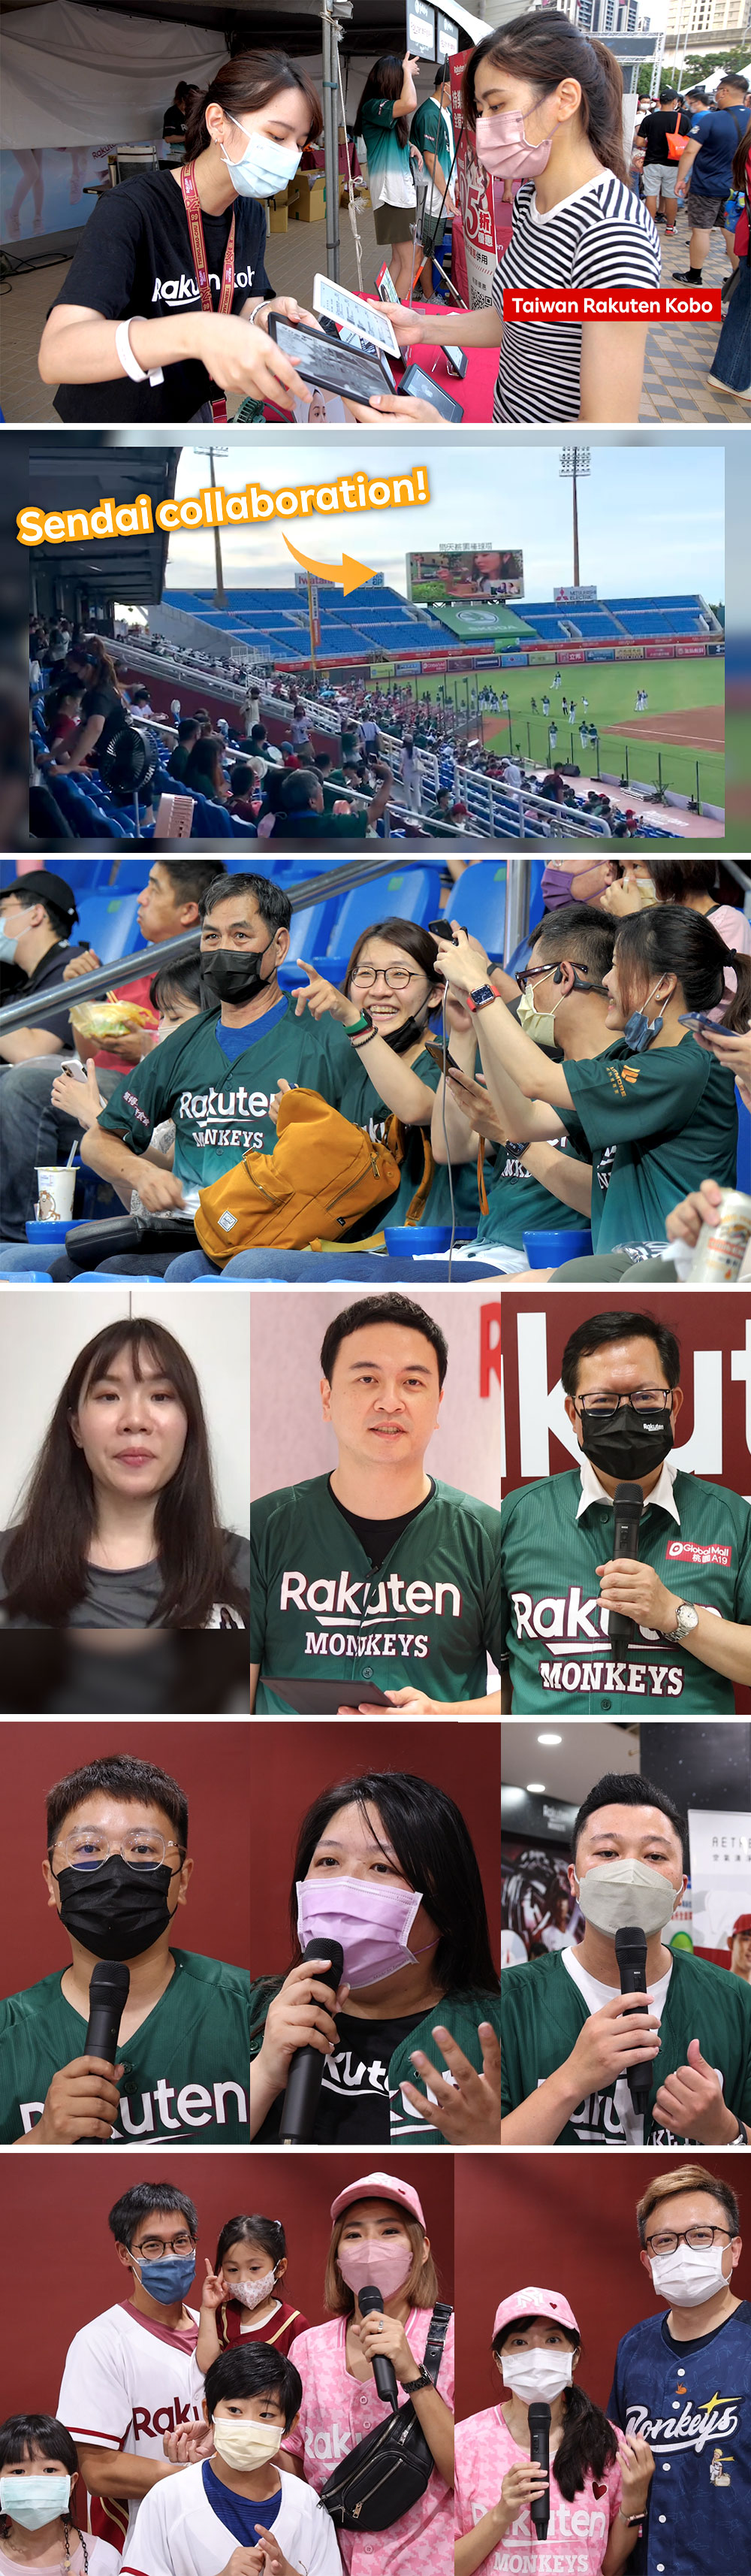 Taiwan Rakuten Group Day Engages Fans and Employees Rakuten Group, Inc.